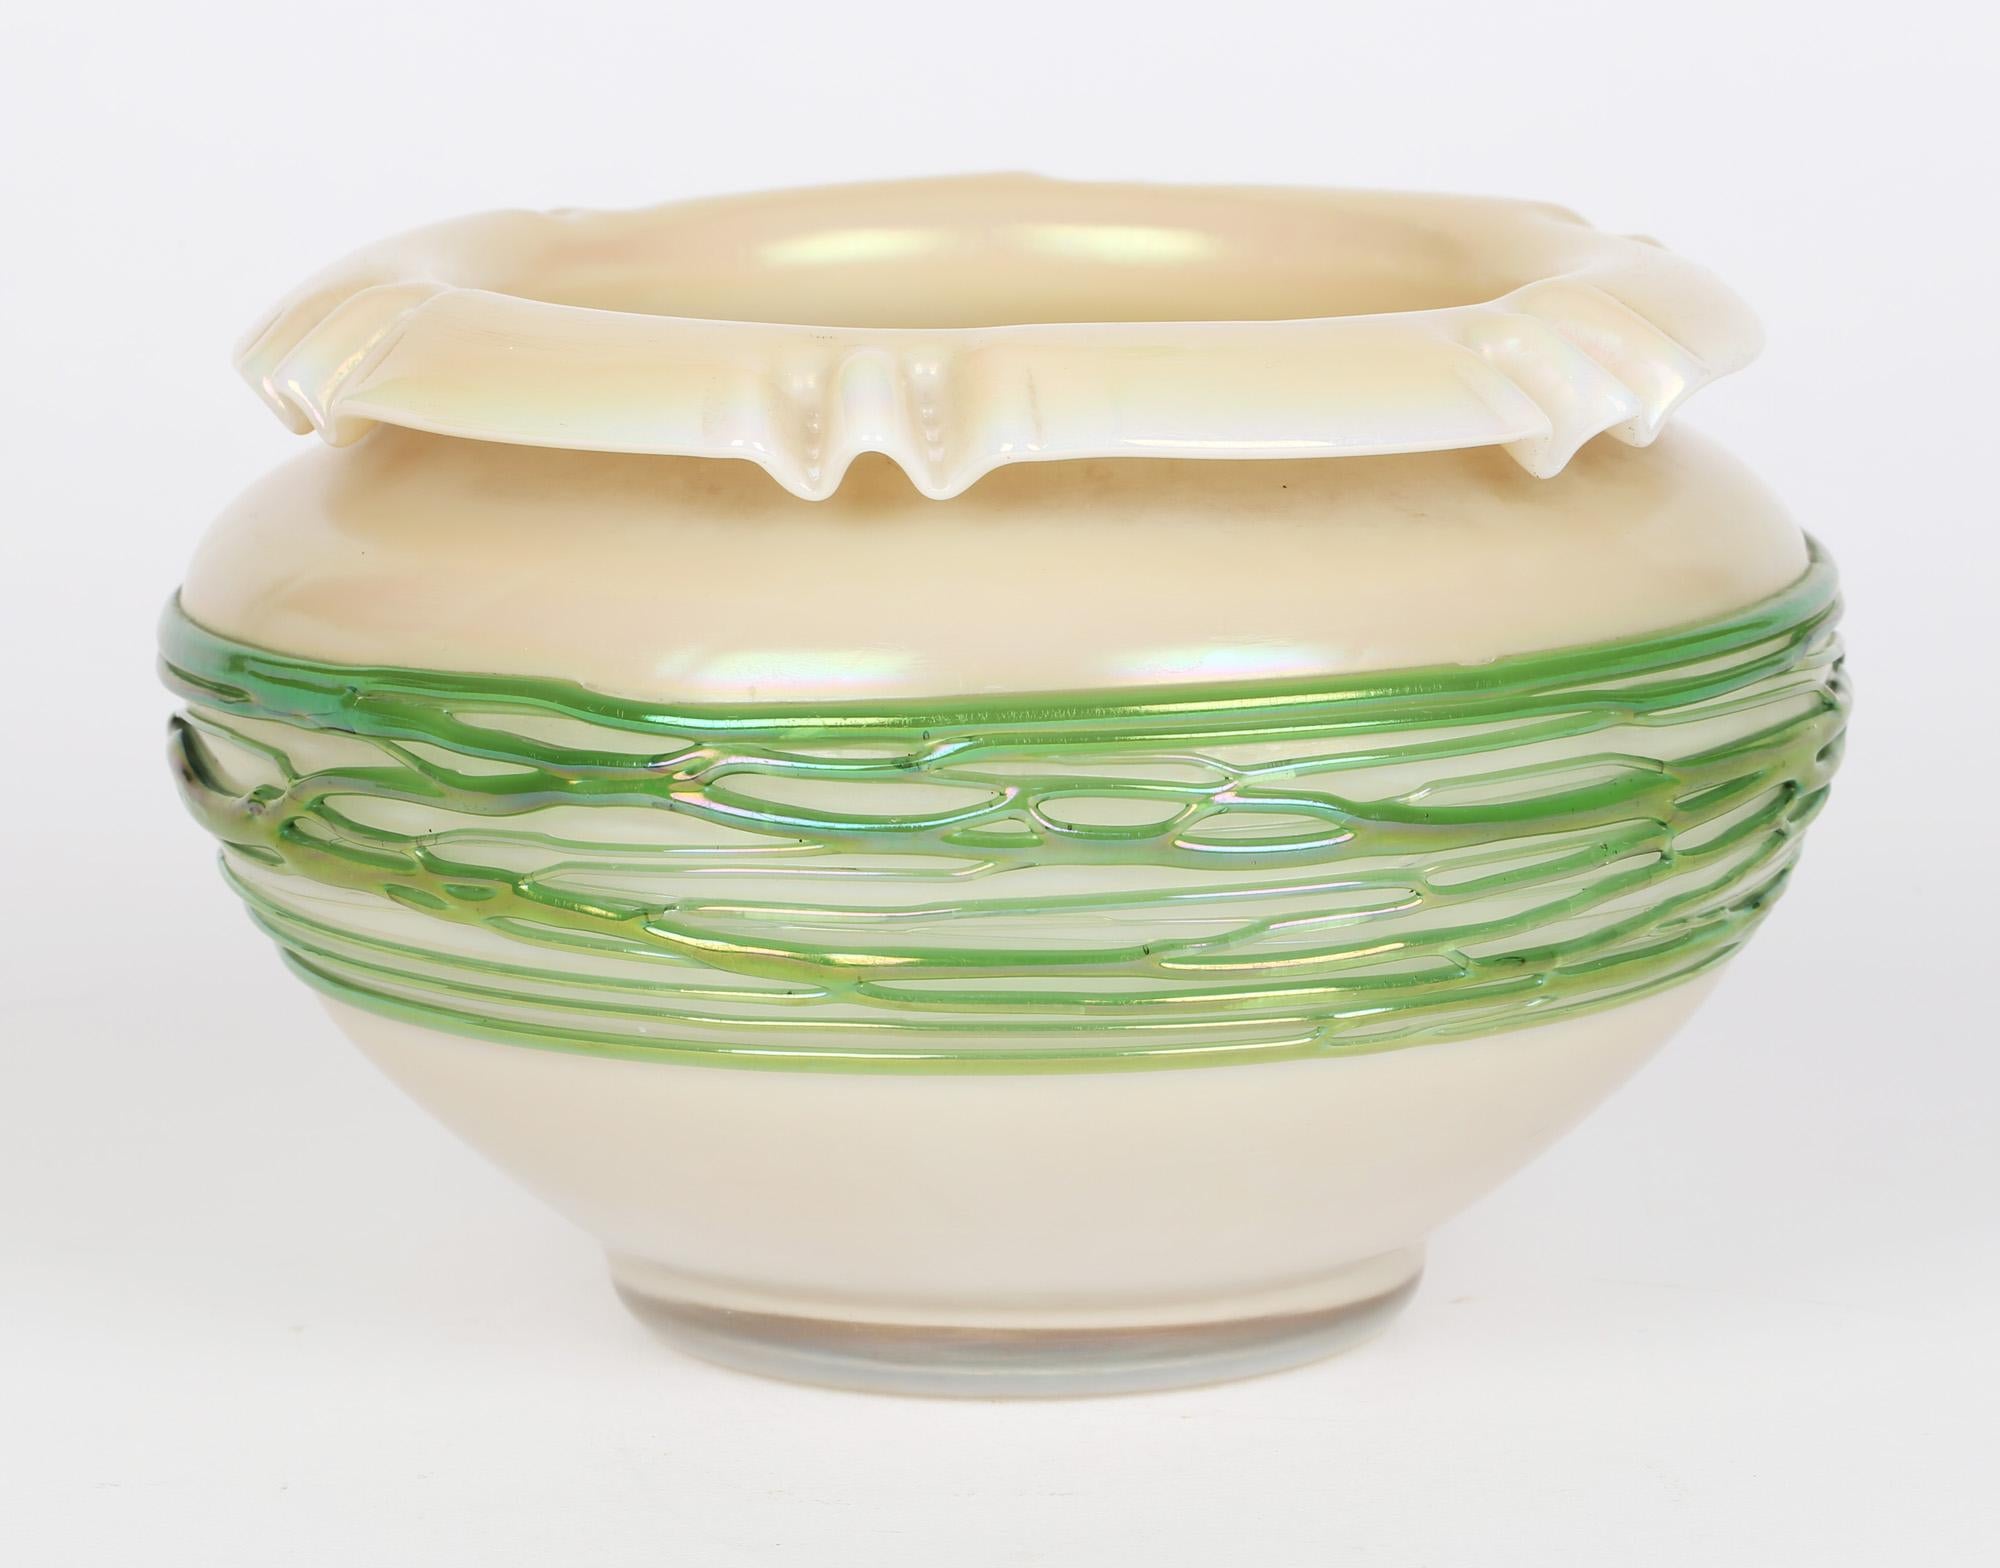 Palme König Art Nouveau Green Trailed Thread Design Iridescent Glass Bowl For Sale 4